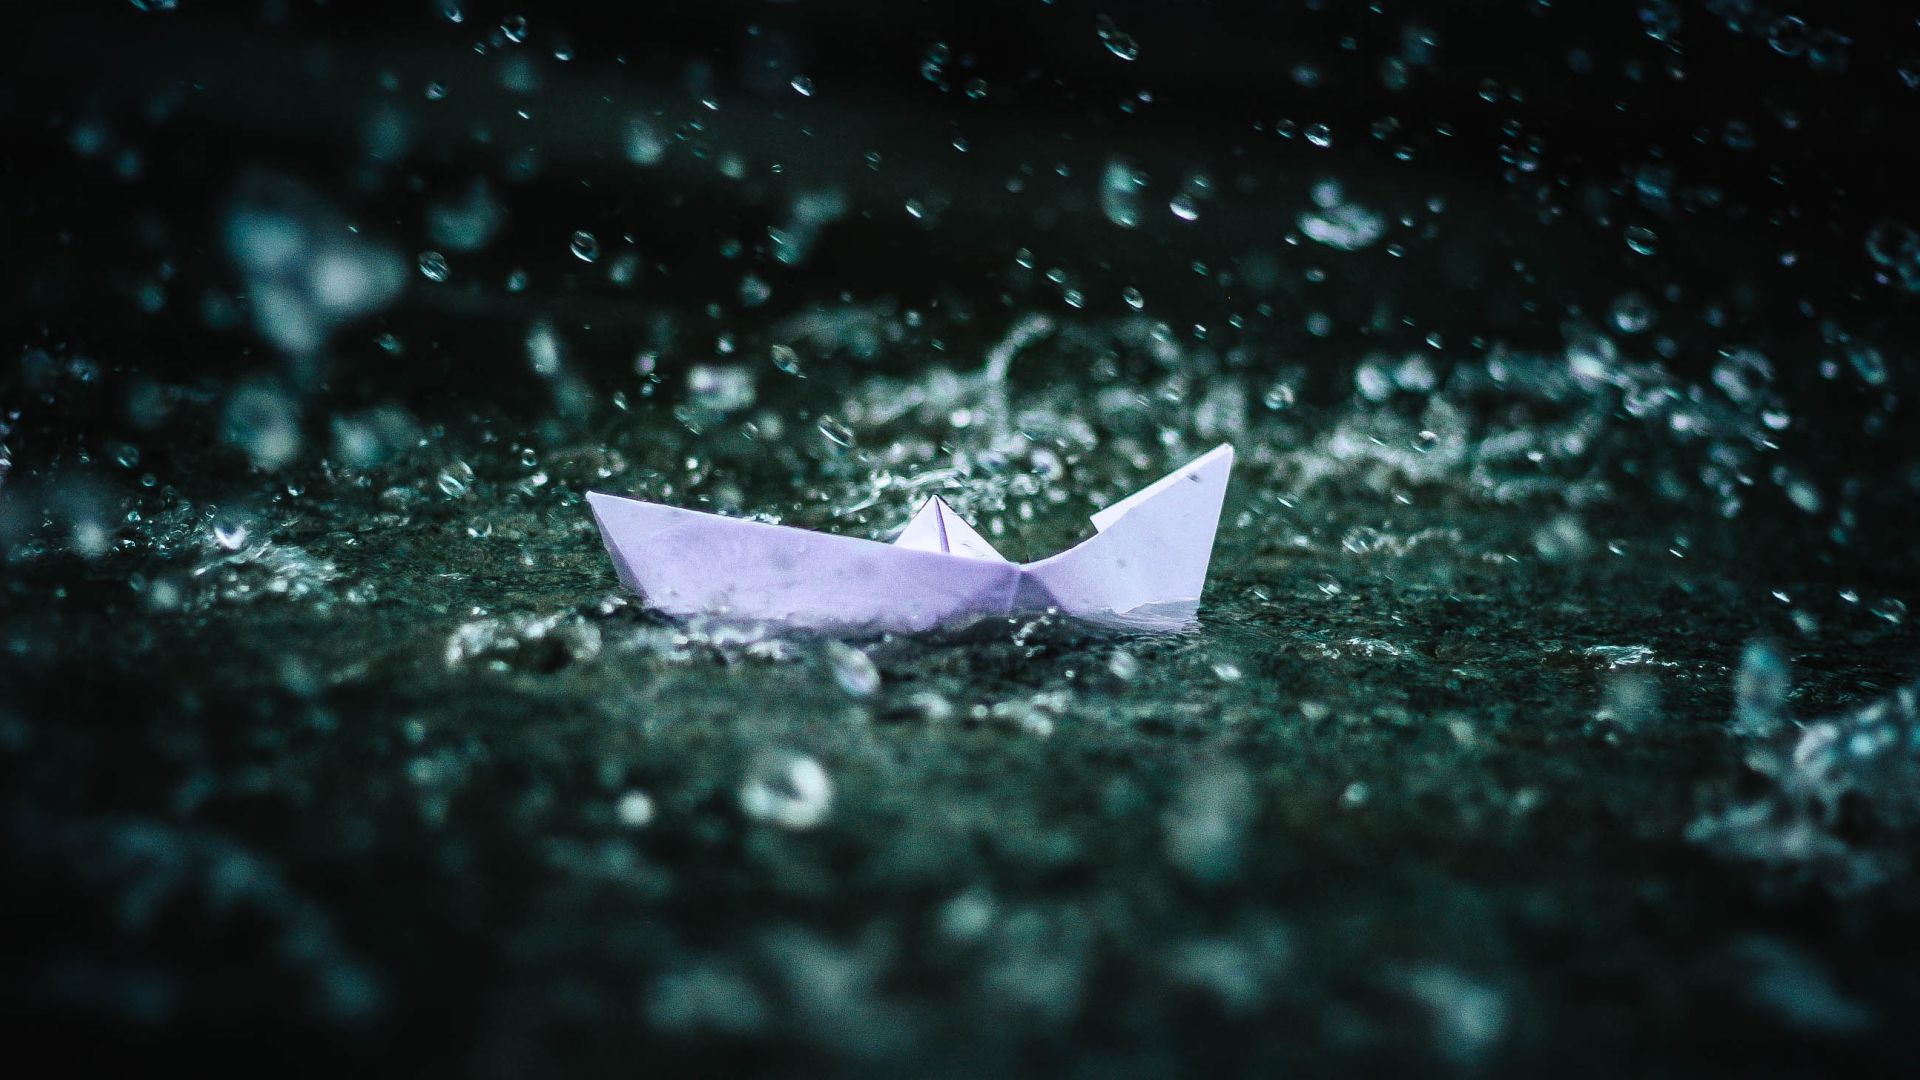 Desktop Wallpaper Paper Boat, Play, Rain, Water Splashes, Hd Image,  Picture, Background, F0880e